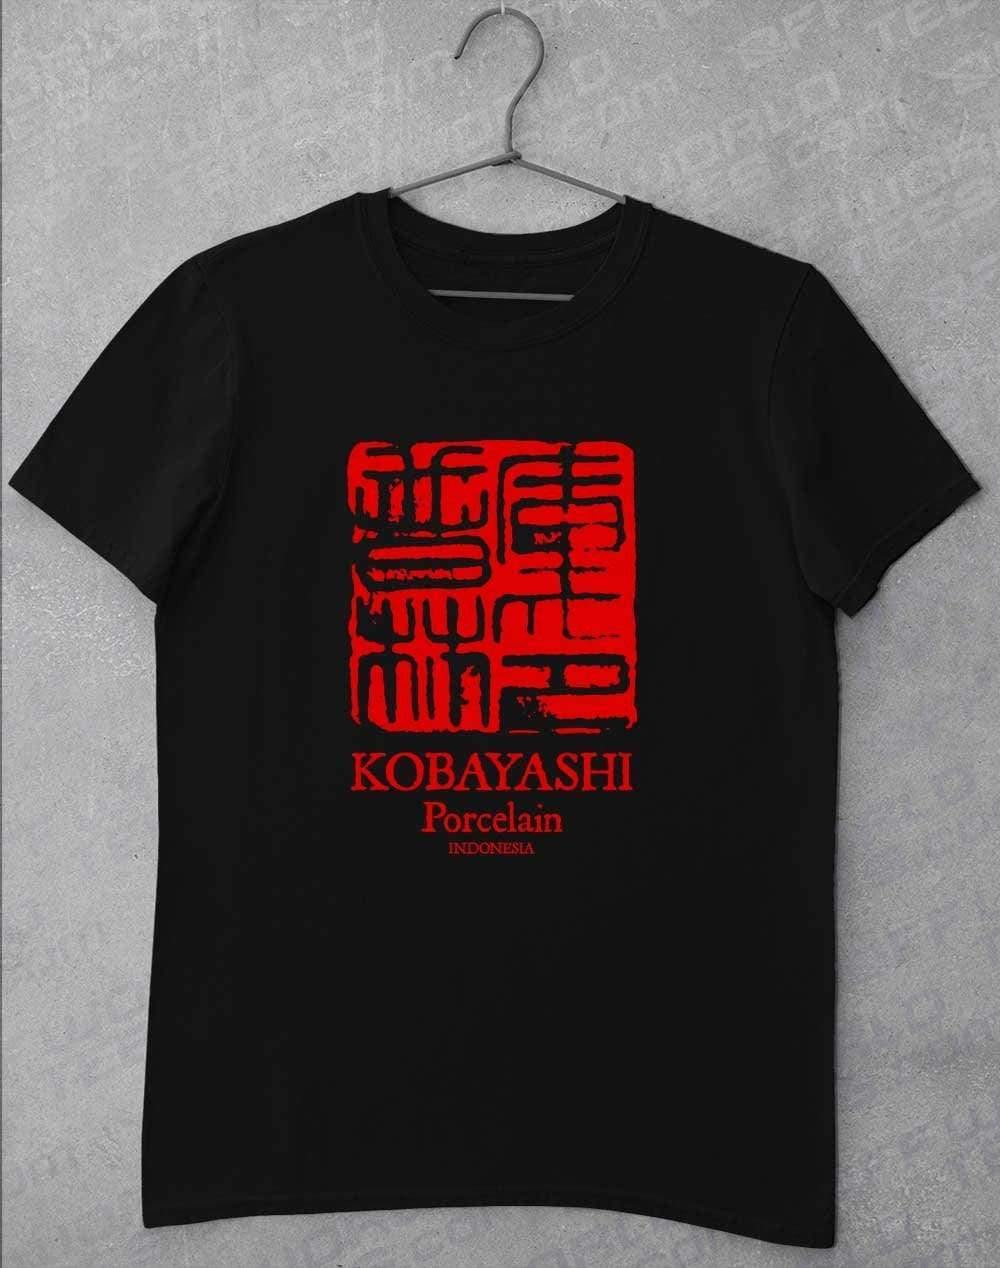 Kobayashi Porcelain T-Shirt S / Black  - Off World Tees